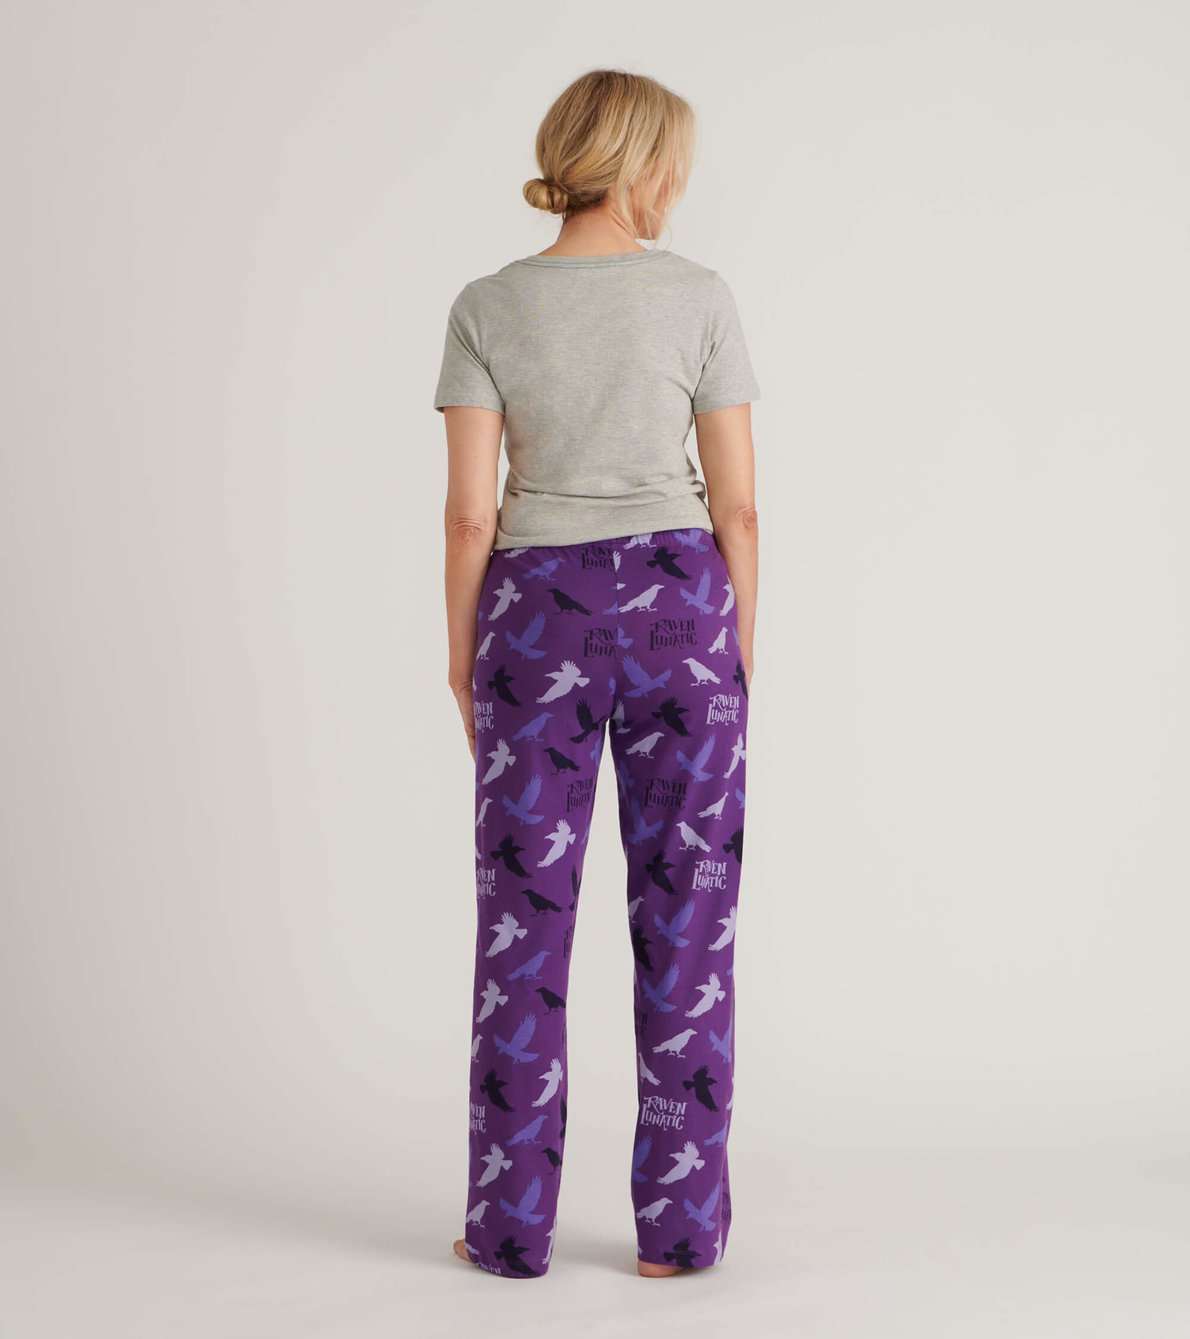 View larger image of Raven Lunatic Women's Jersey Pajama Pants